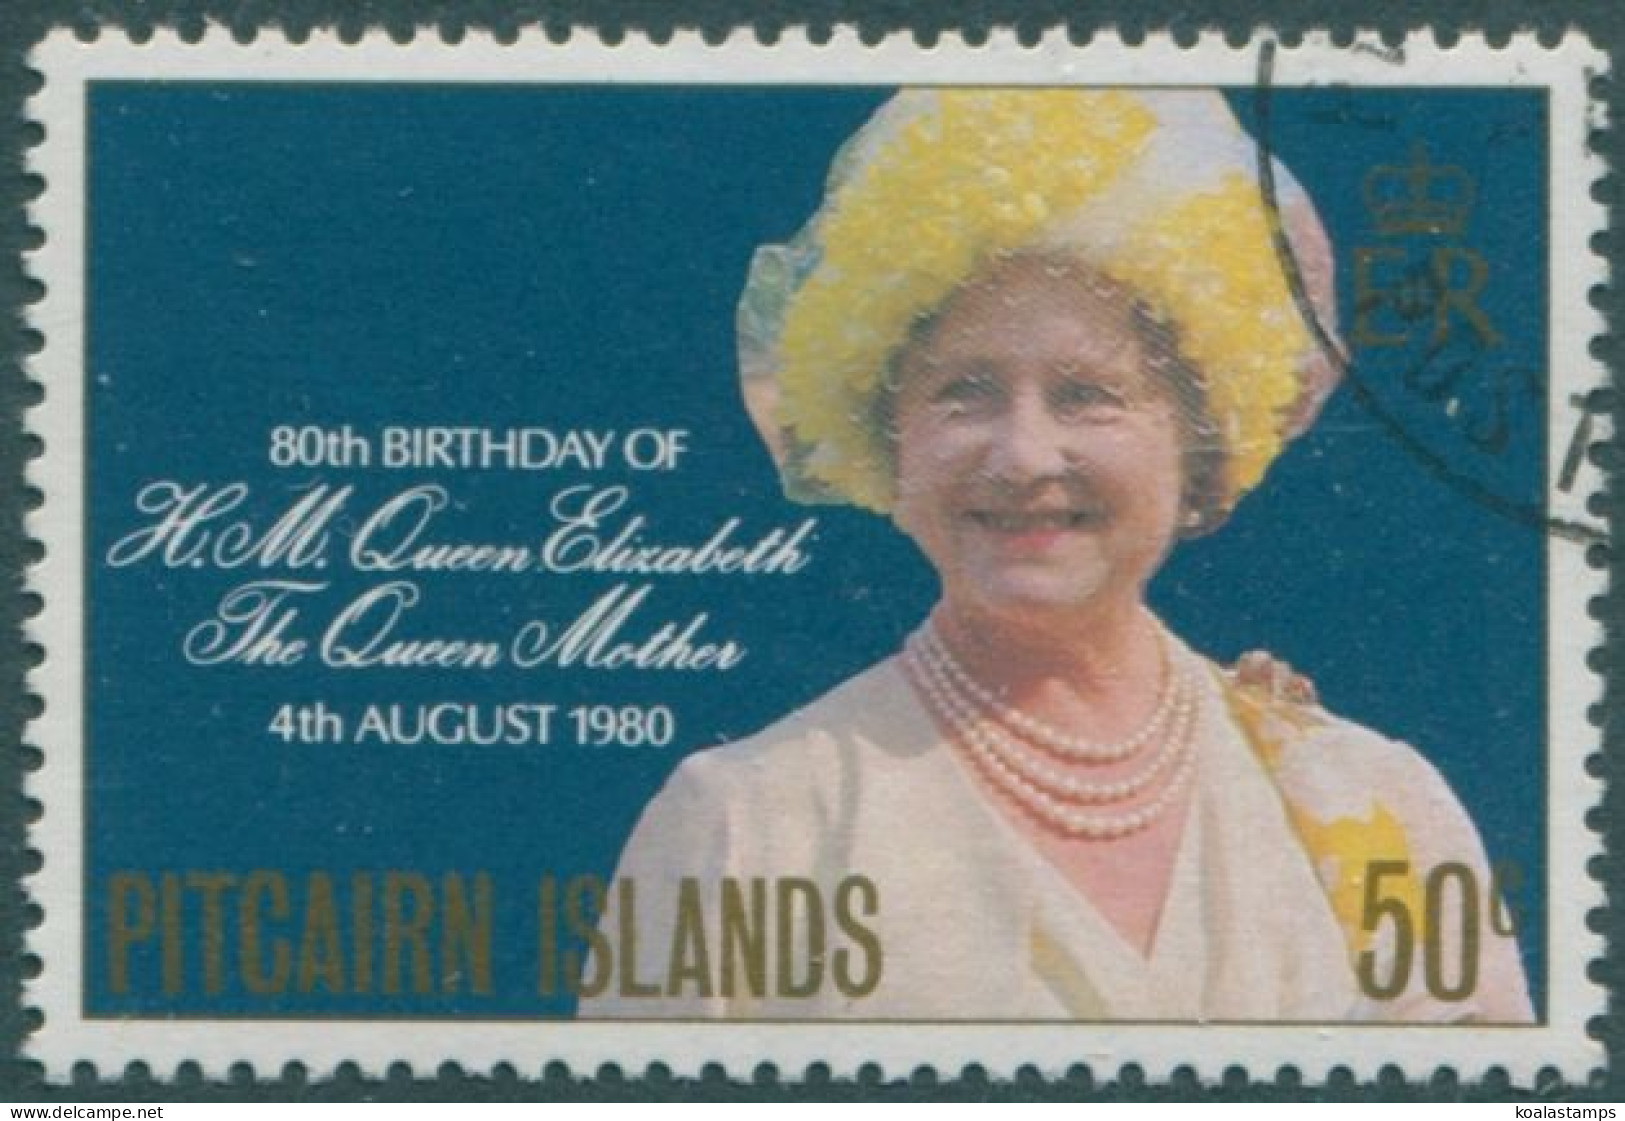 Pitcairn Islands 1980 SG206 50c Queen Mother Birthday FU - Pitcairn Islands